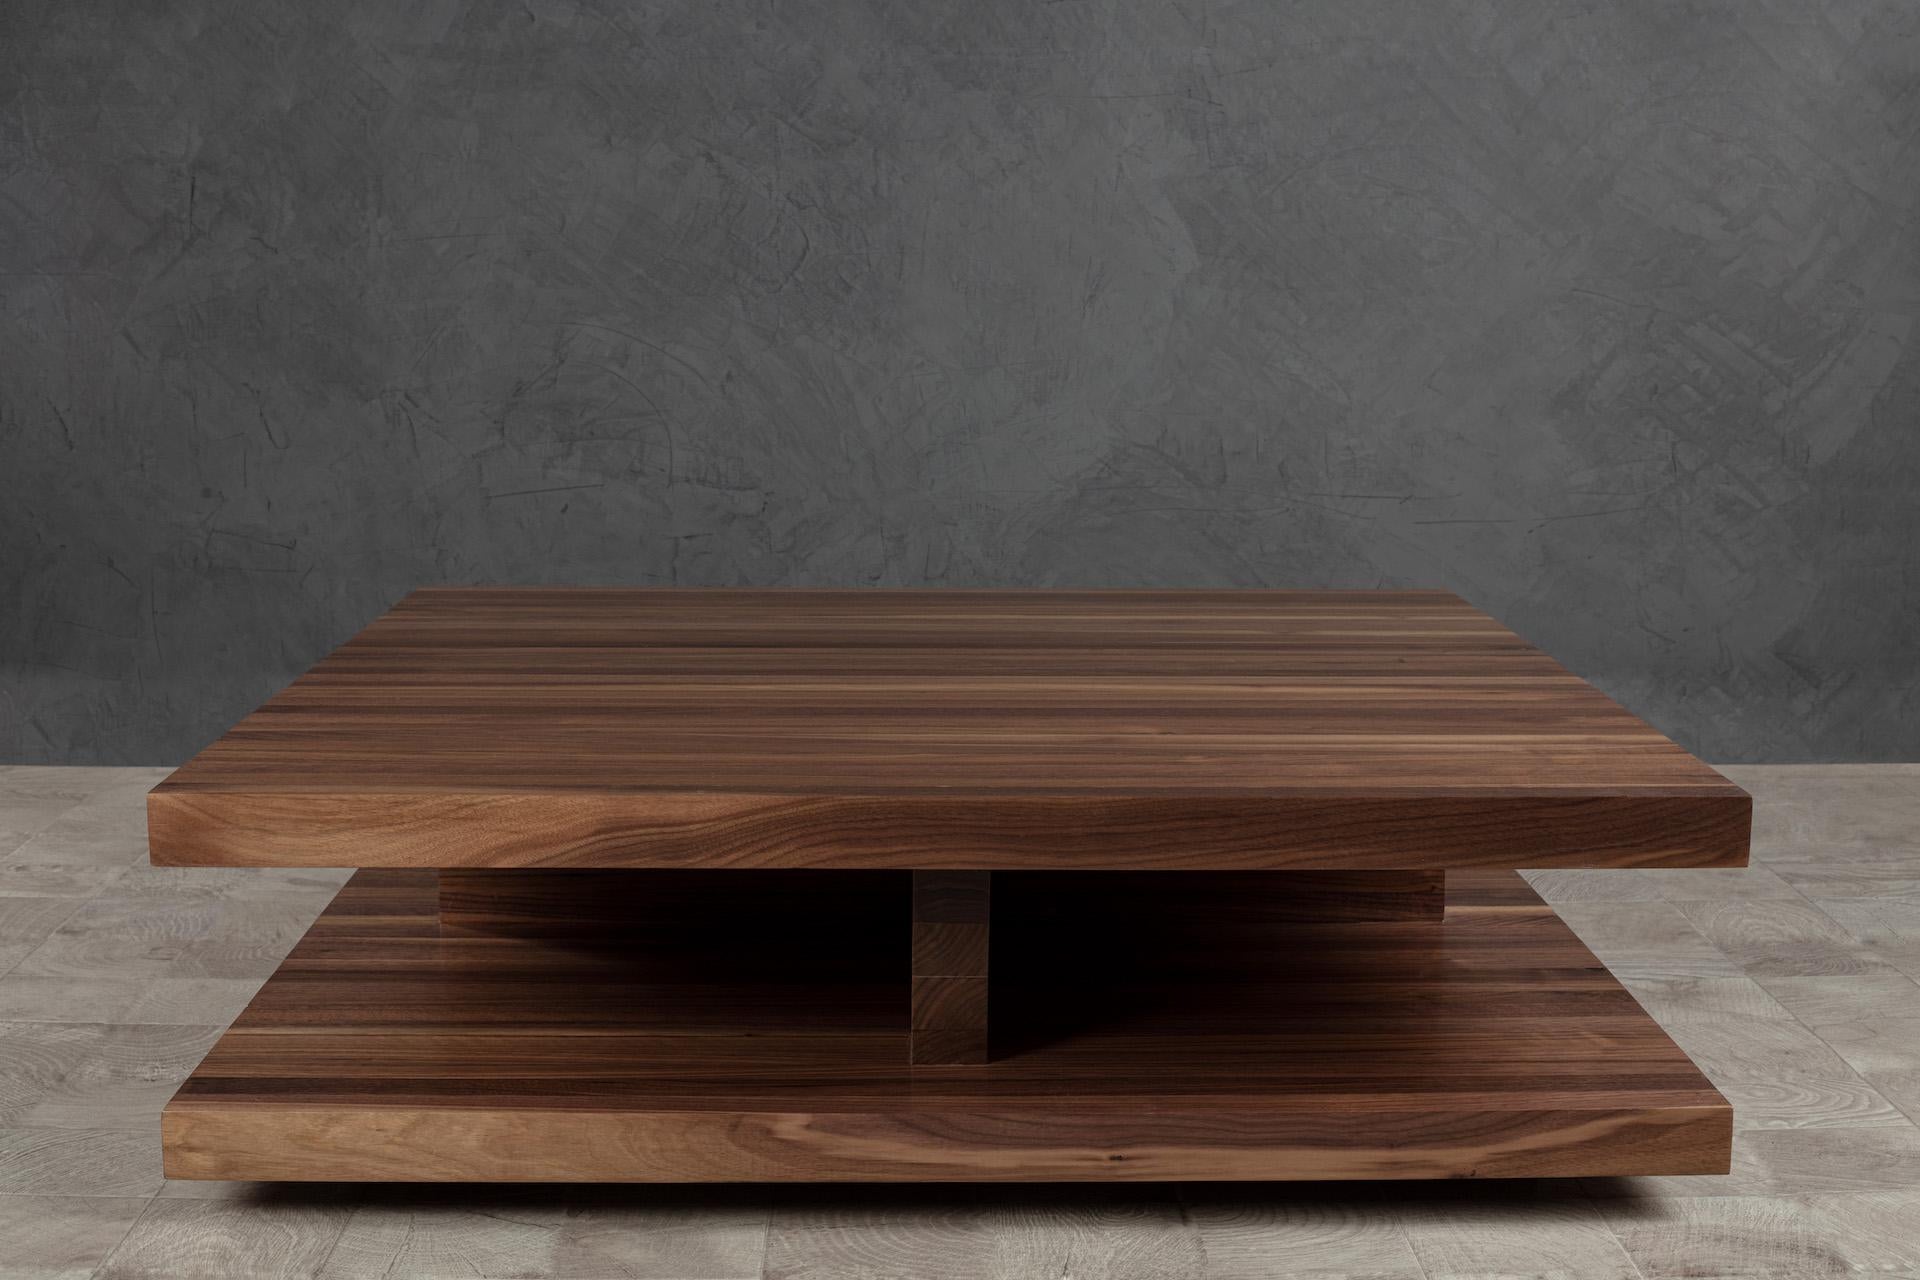 modern walnut coffee table